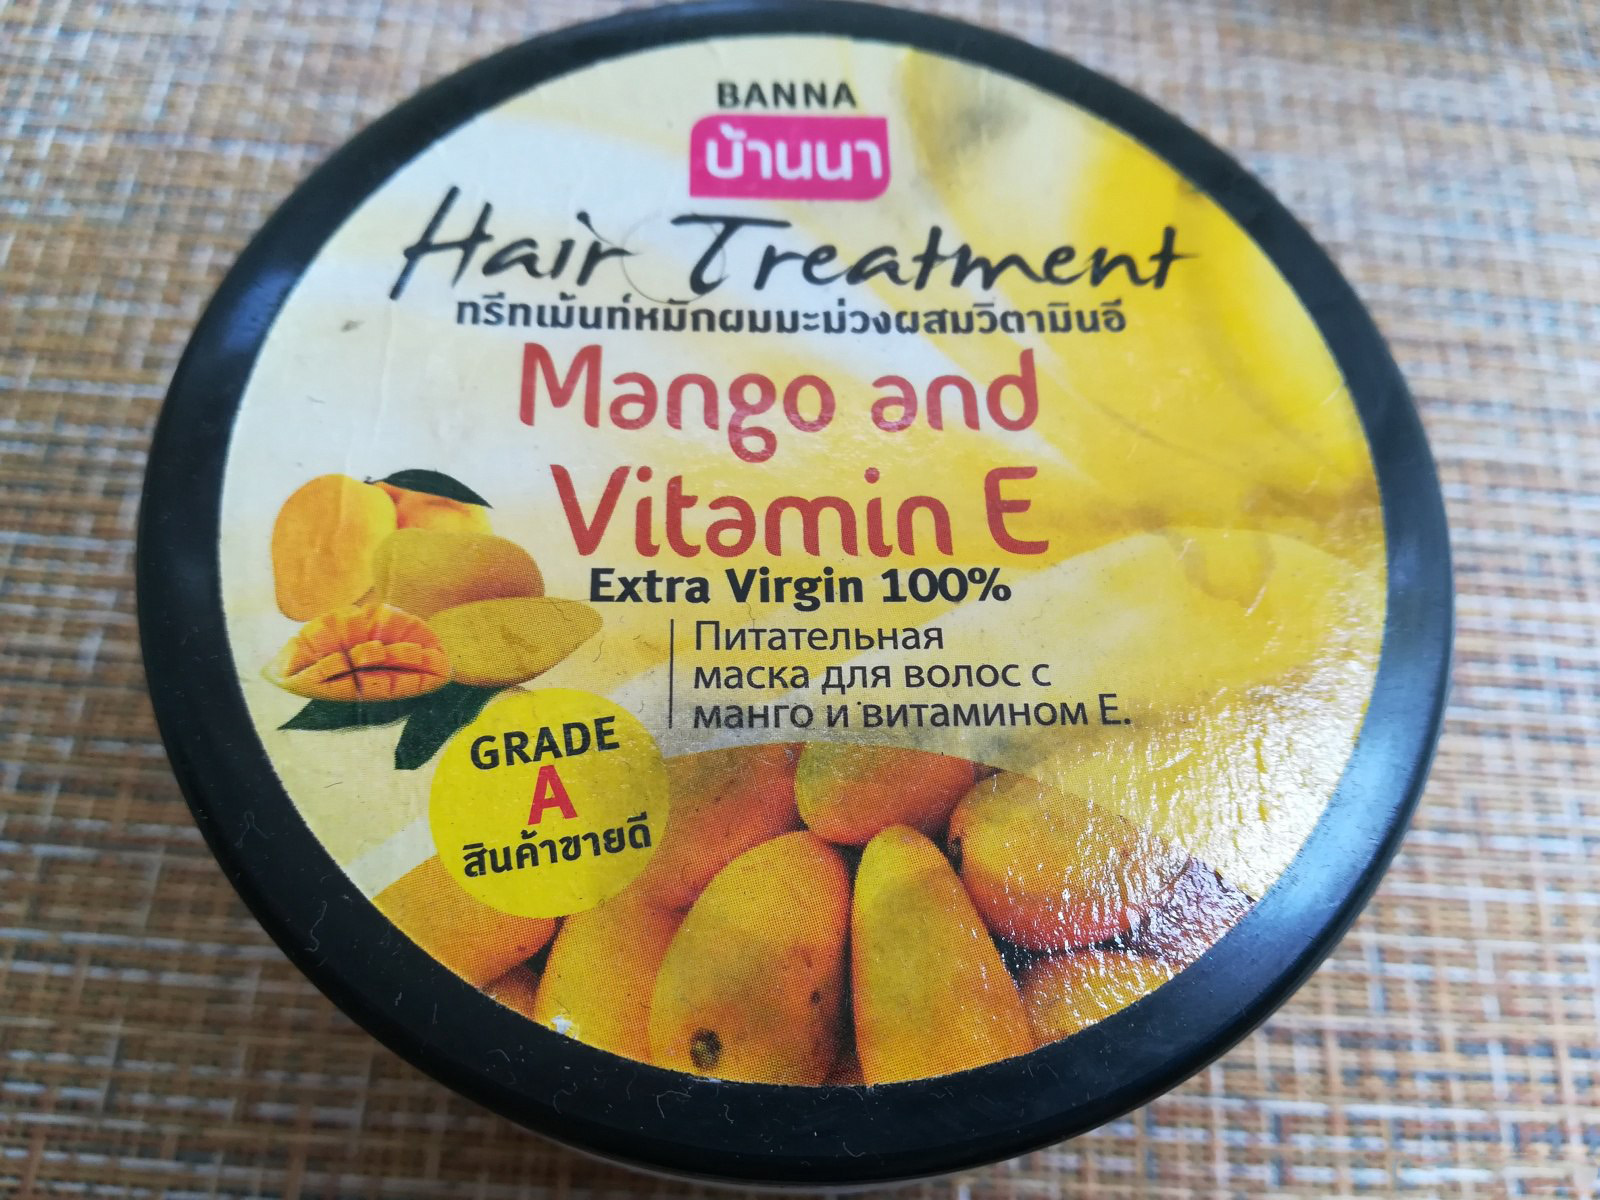 манговая маска для волос из тайланда. Натуральная питательная маска для волос с манго и витамином Е BANNA Hair Treatment Mango and Vitamin E 300 мл. Таиланд